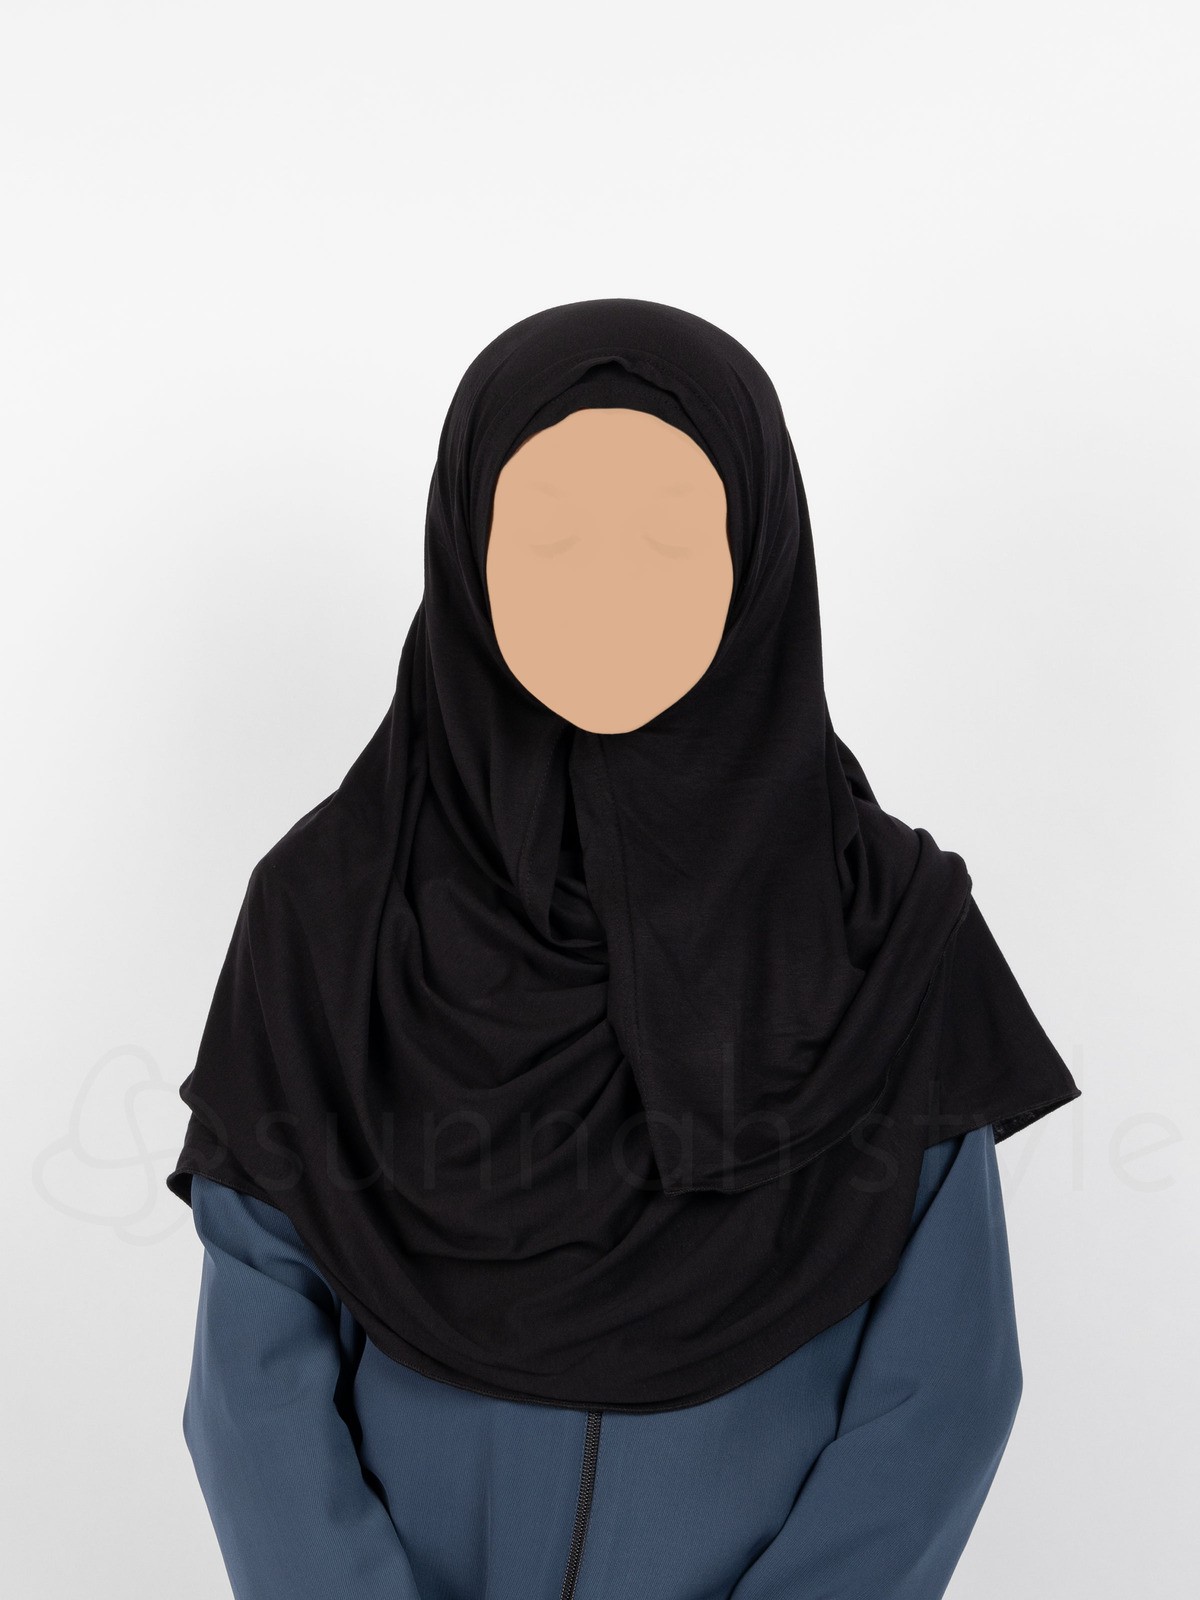 Sunnah Style - Girls Truss Hijab (Black)